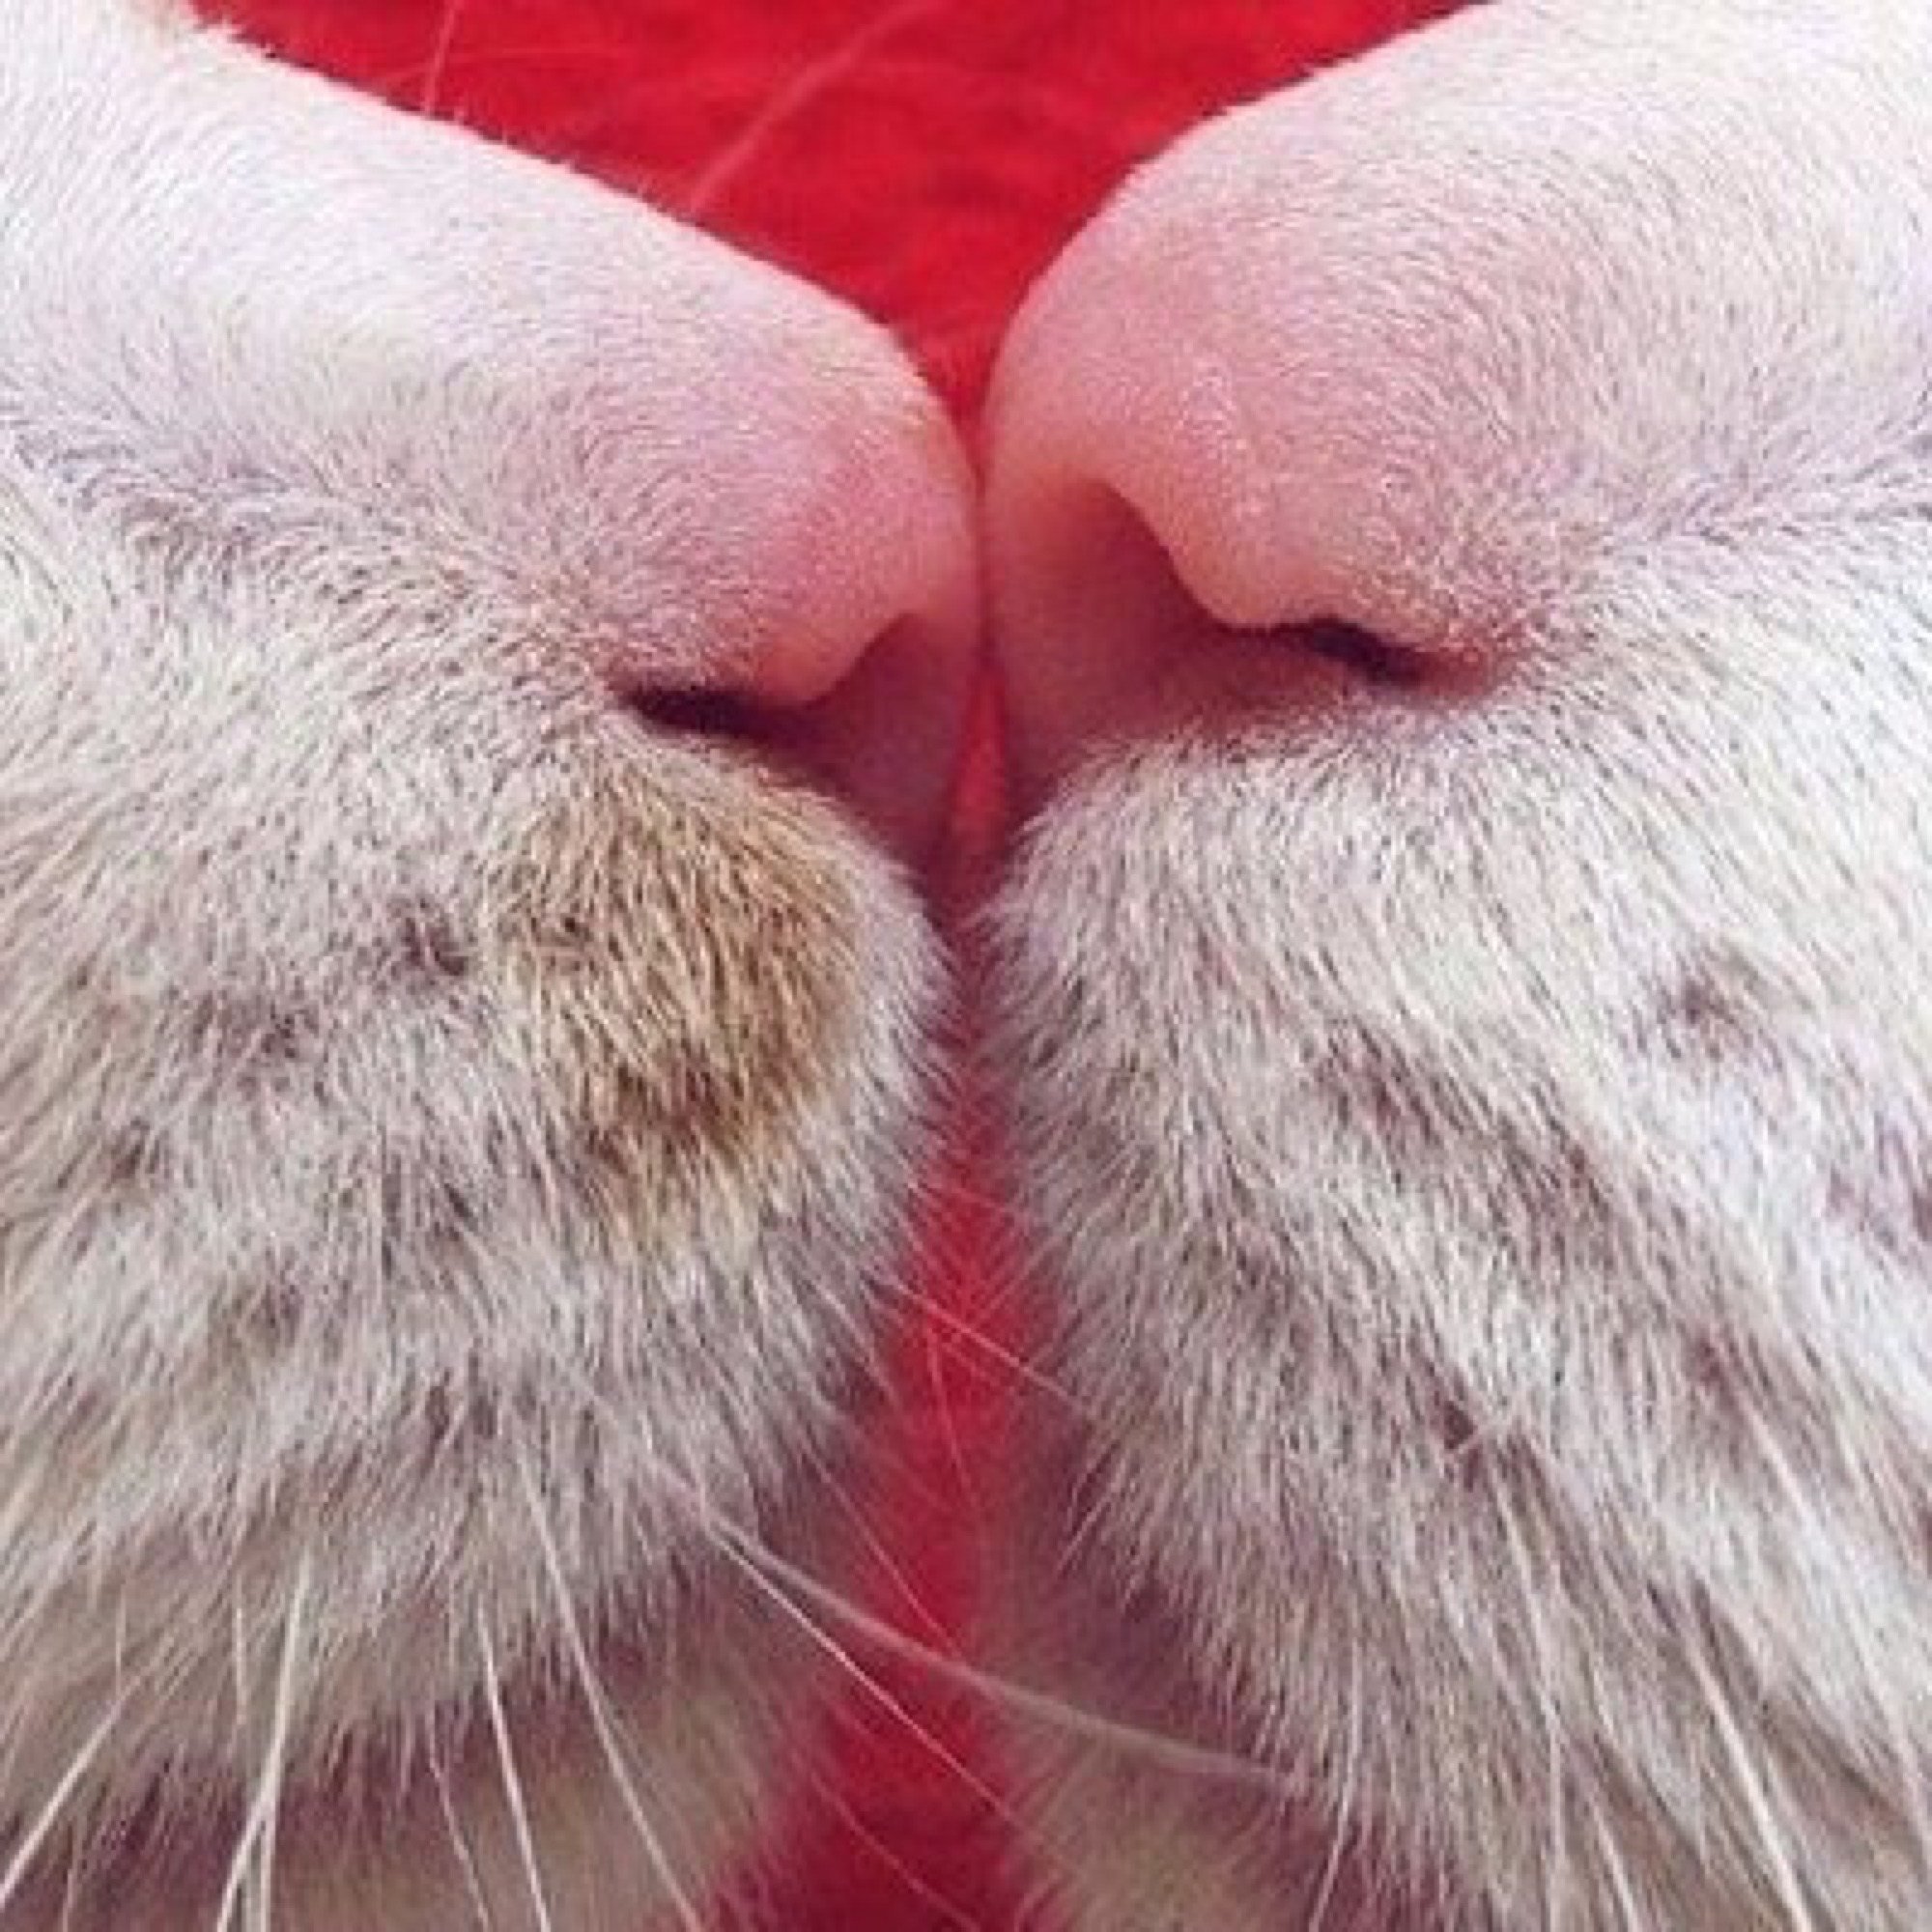 Киса между. Кошачий носик. Носики котиков. Нос кота. Поцелуй кота.